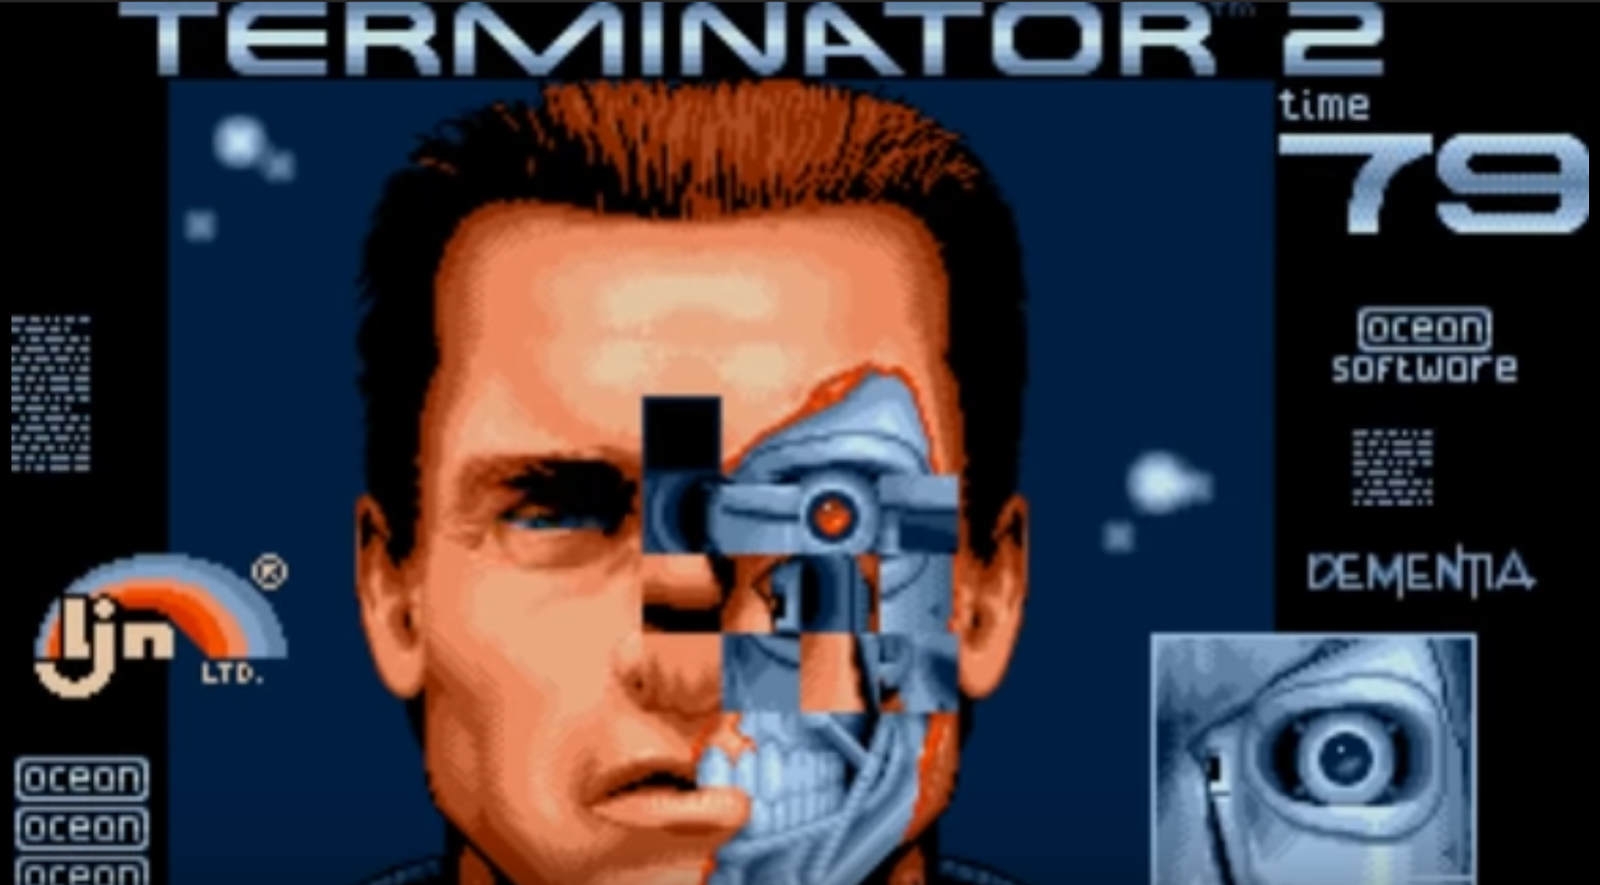 Terminator judgment day игра. Терминатор 2 игра. The Terminator игра 1991. Терминатор игра сега. Terminator 1991 dos game.